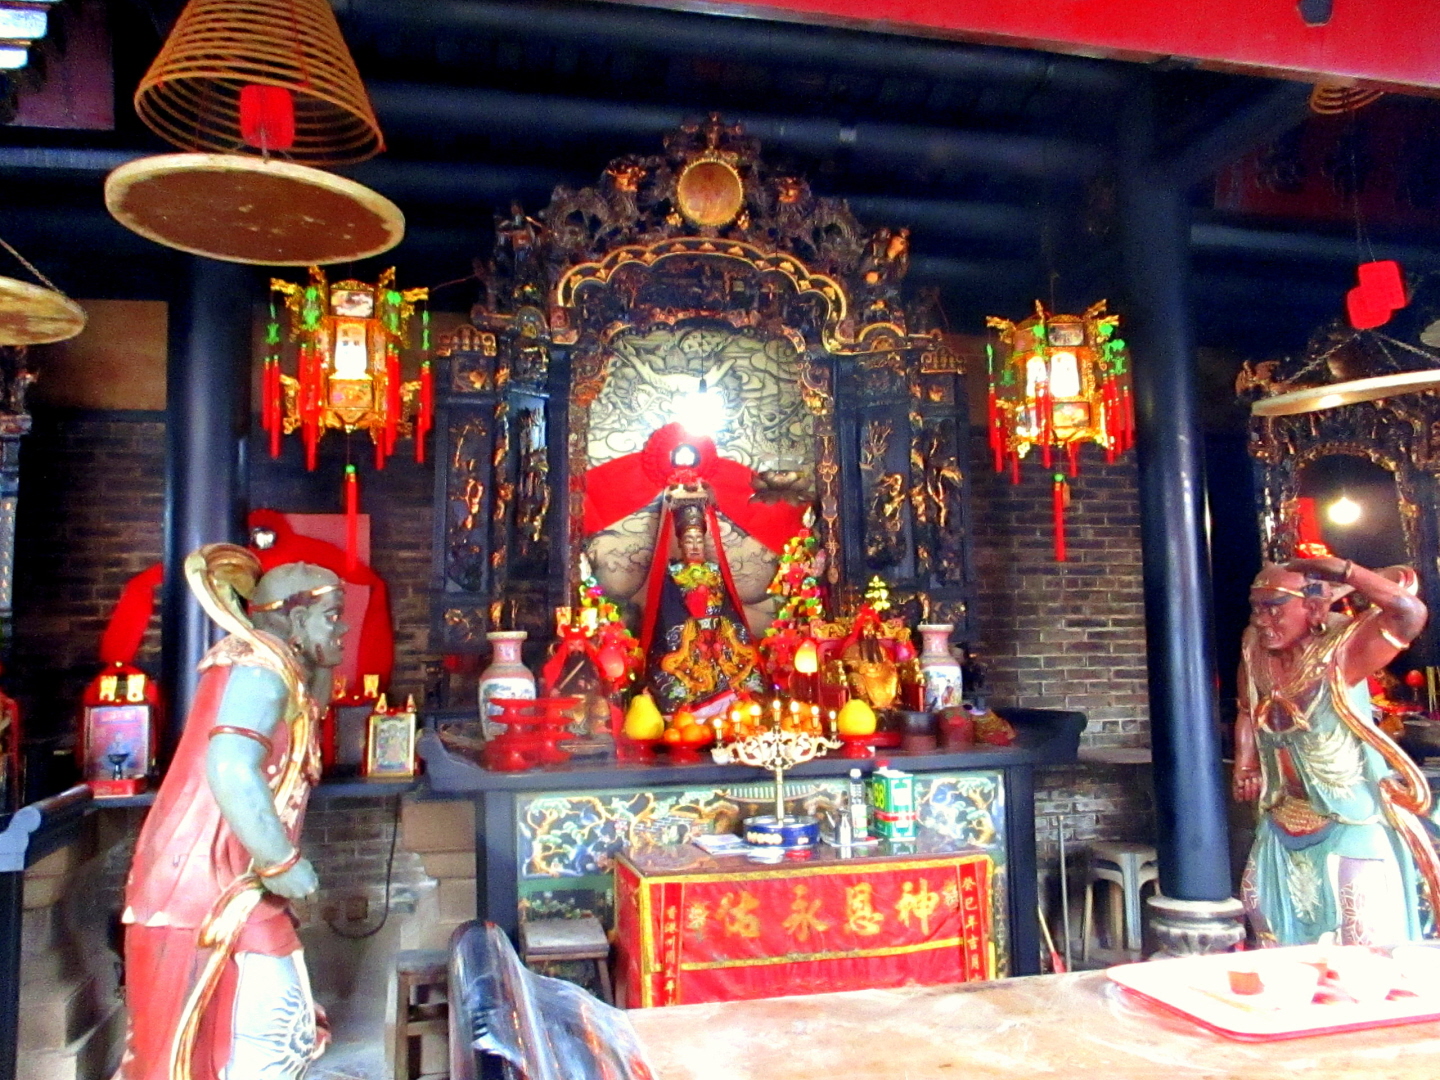 Yuk Hui Temple (Pak Tai Temple), Cheung Chau Island, Hong Kong